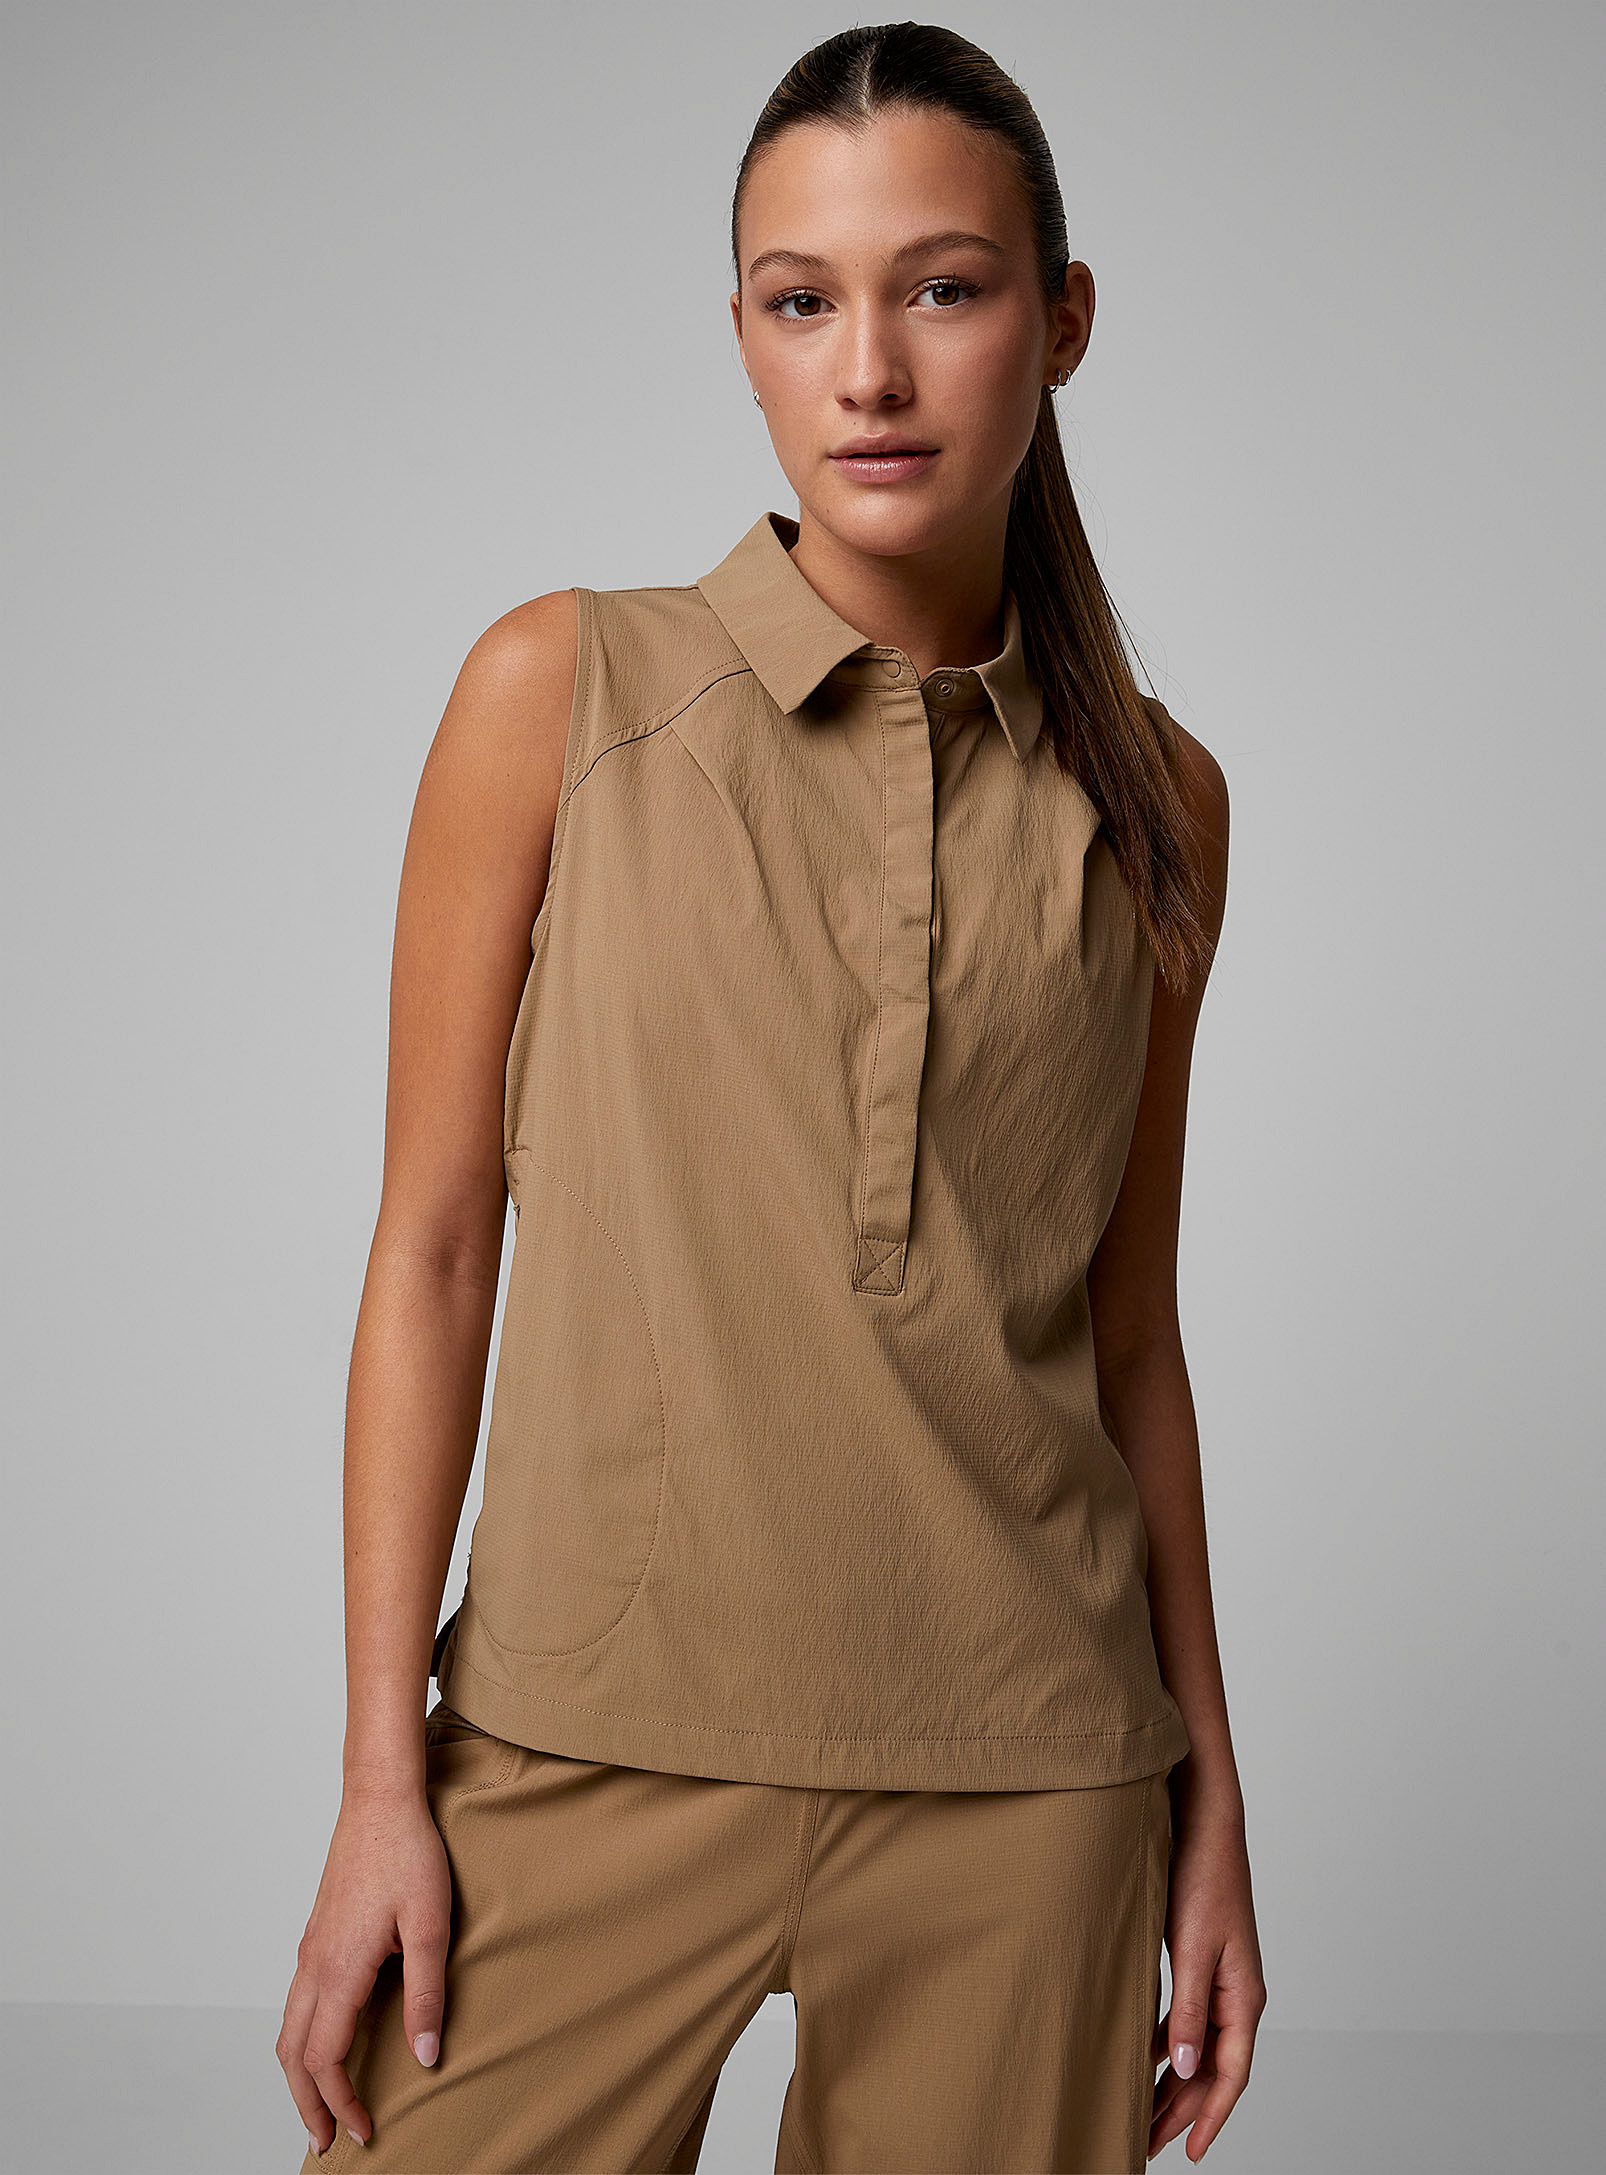 Indyeva - La blouse ripstop extensible Zufara II